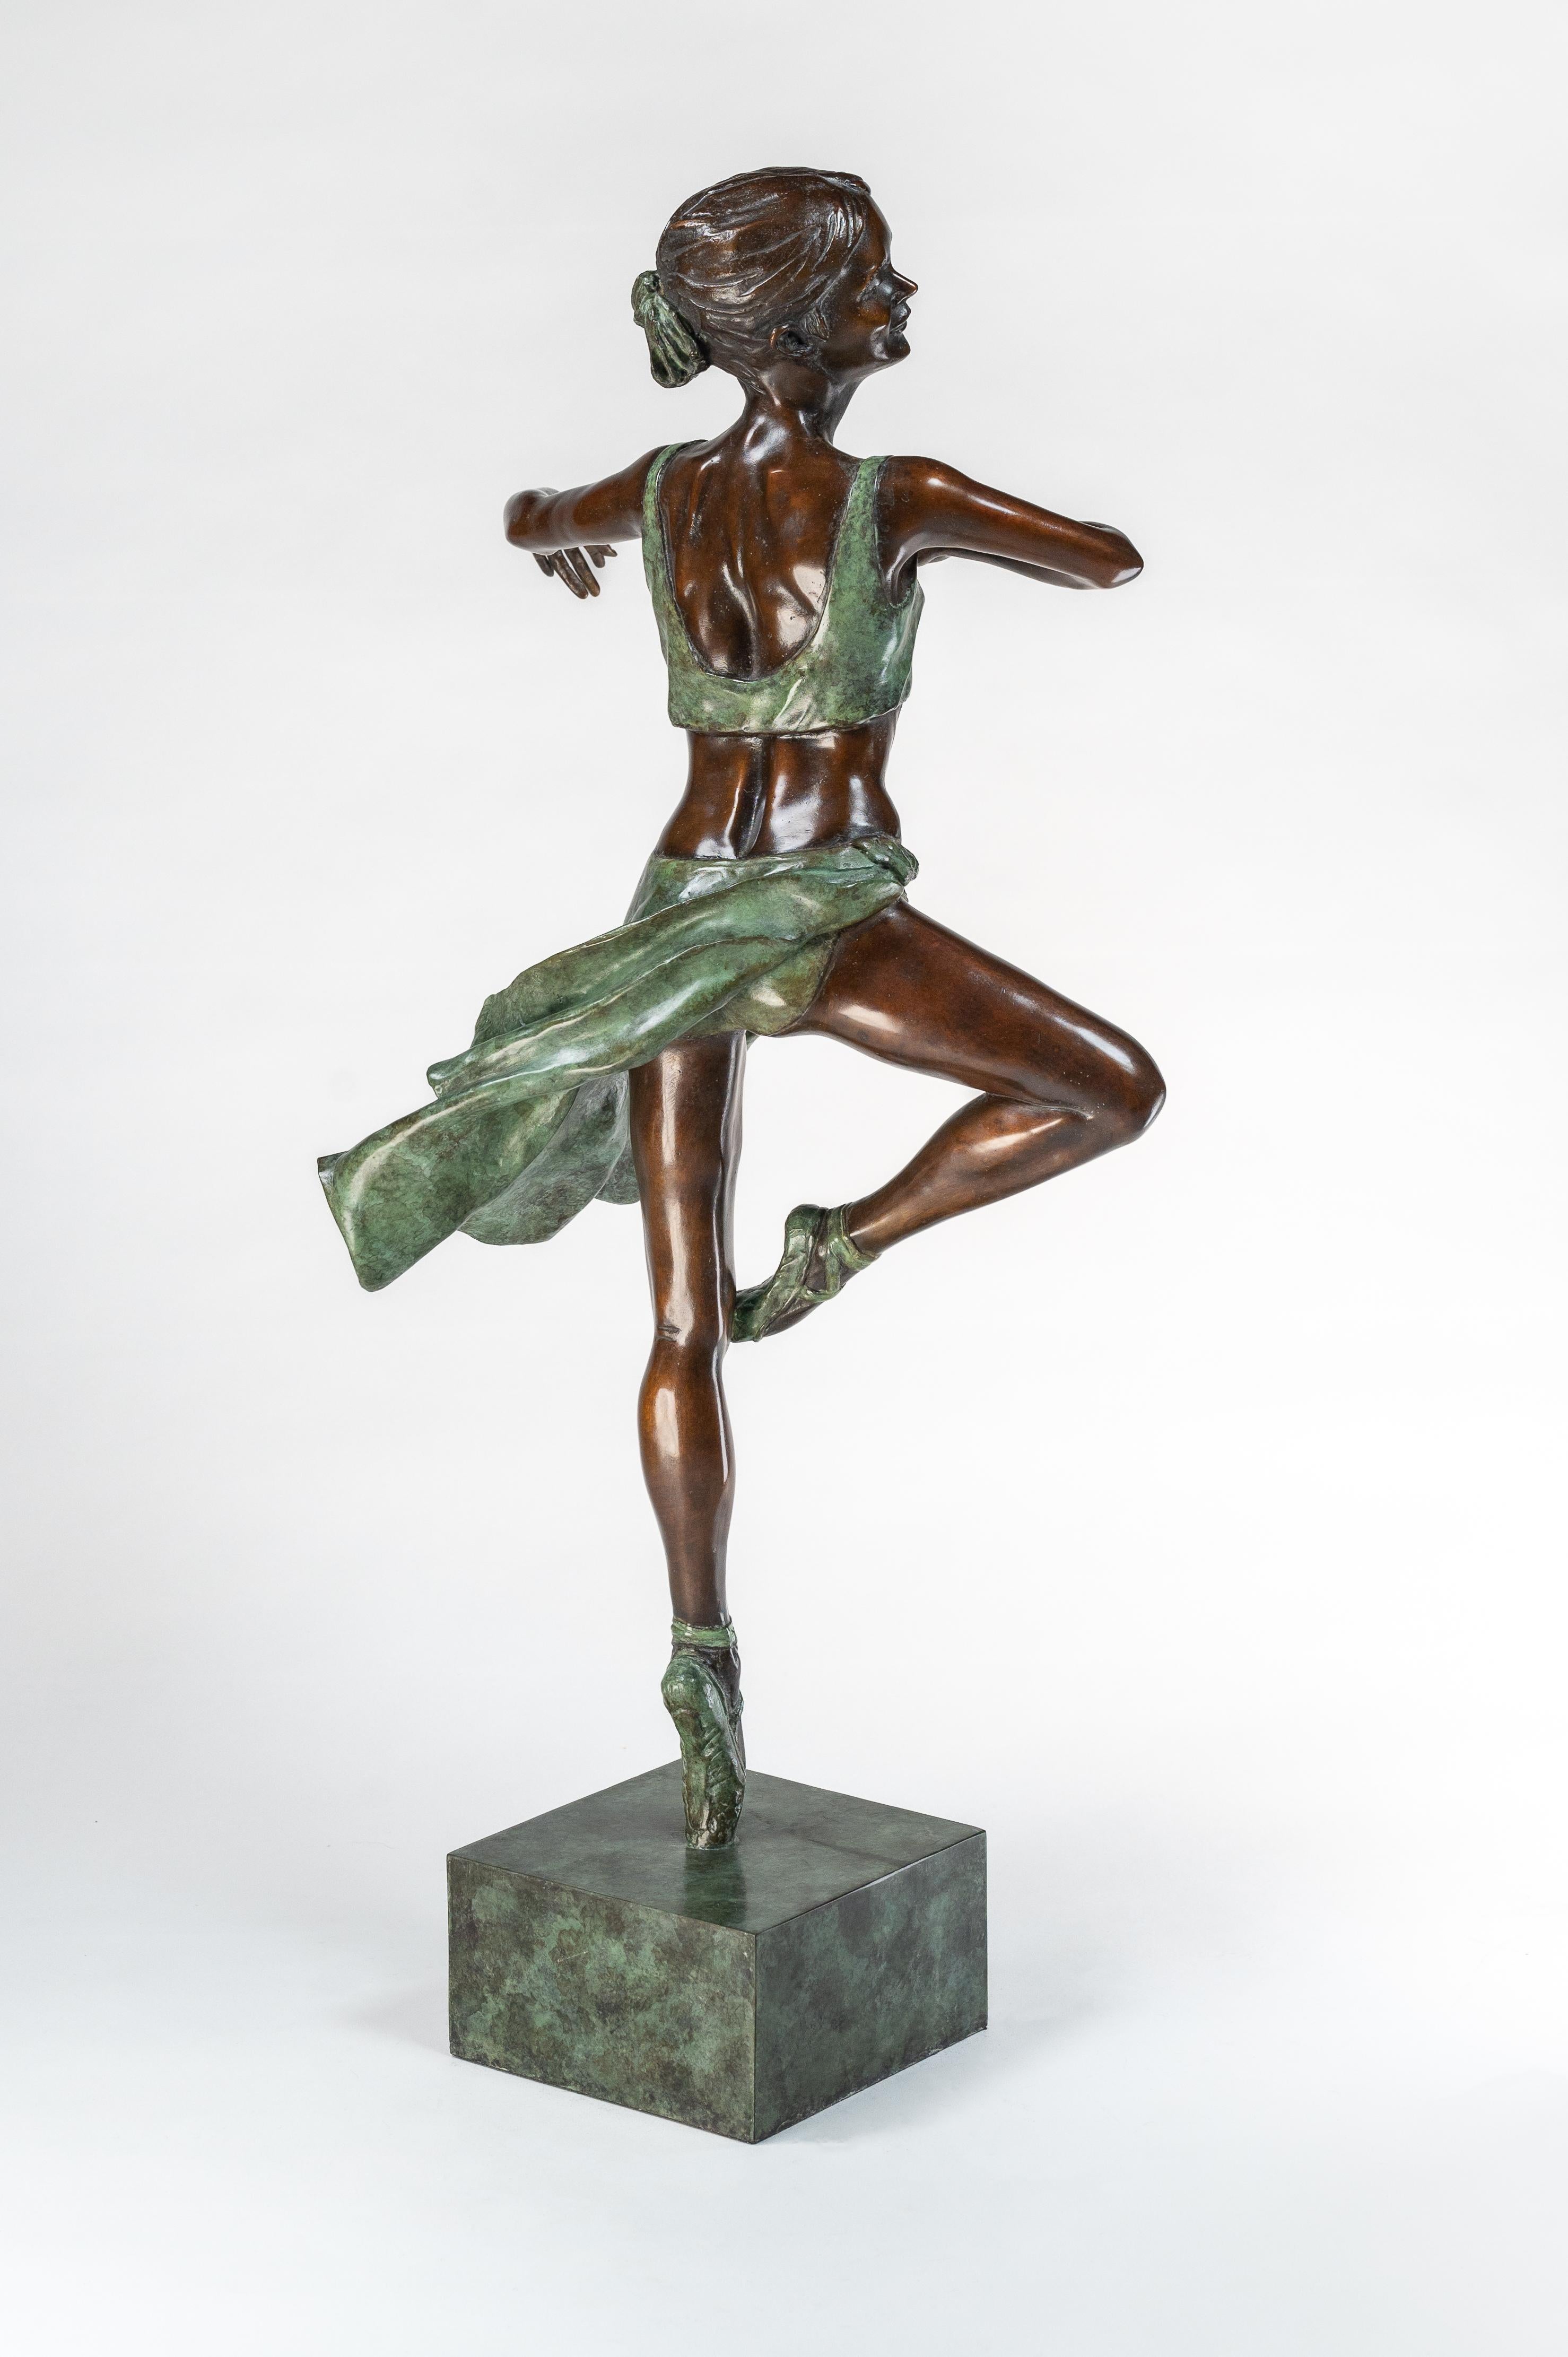 'Pirouette' Contemporary Bronze Sculpture of a Ballerina Dancing, green, figure For Sale 2